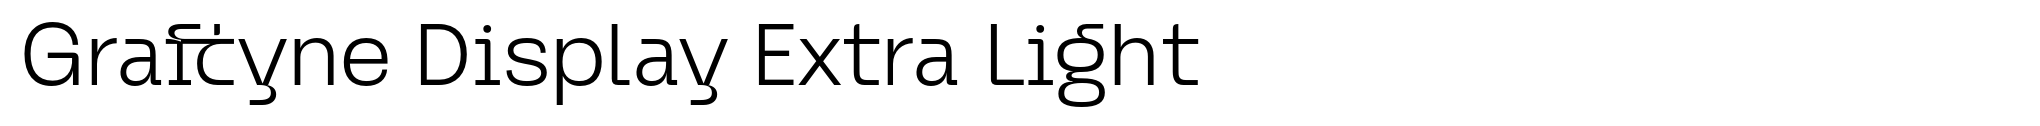 Graftyne Display Extra Light image